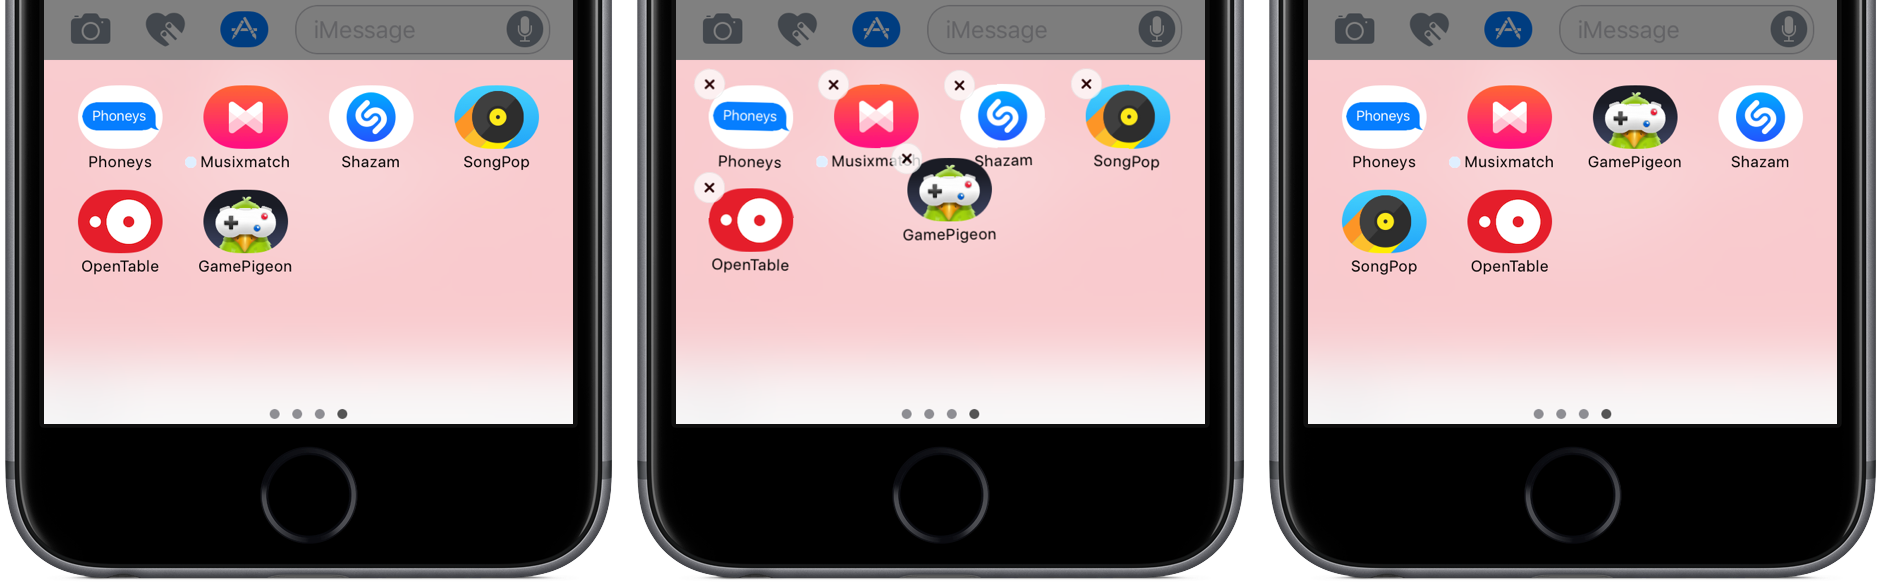 iOS 10 Messages organize apps iPhone screenshot 001